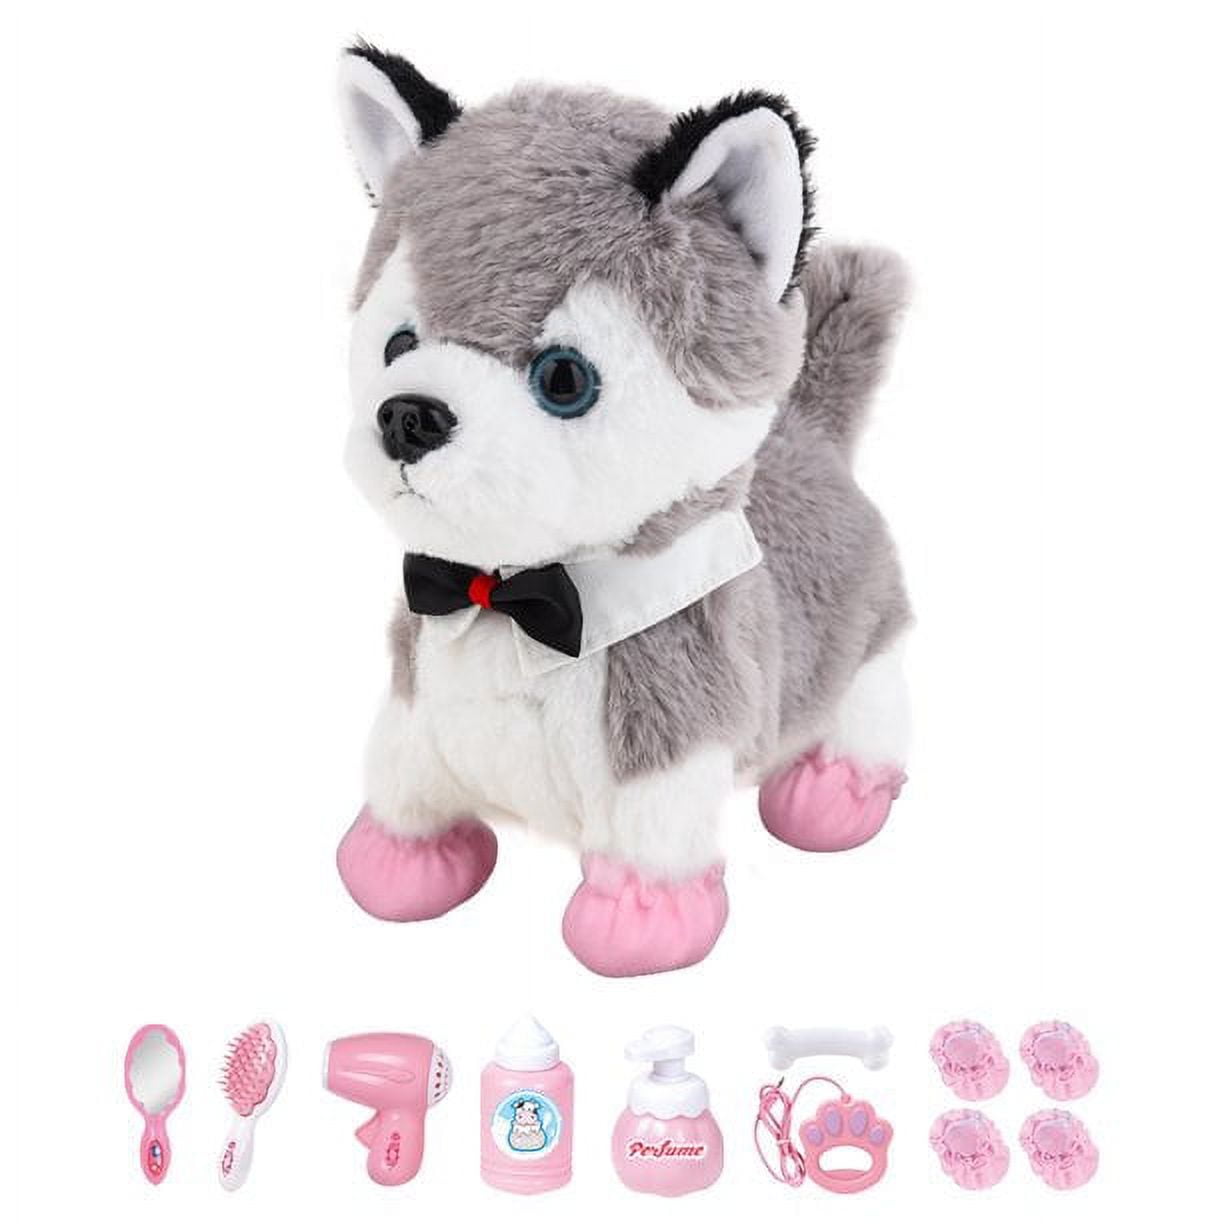  Esstaa Toy Puppy Plush Dog Animal with Control Leash